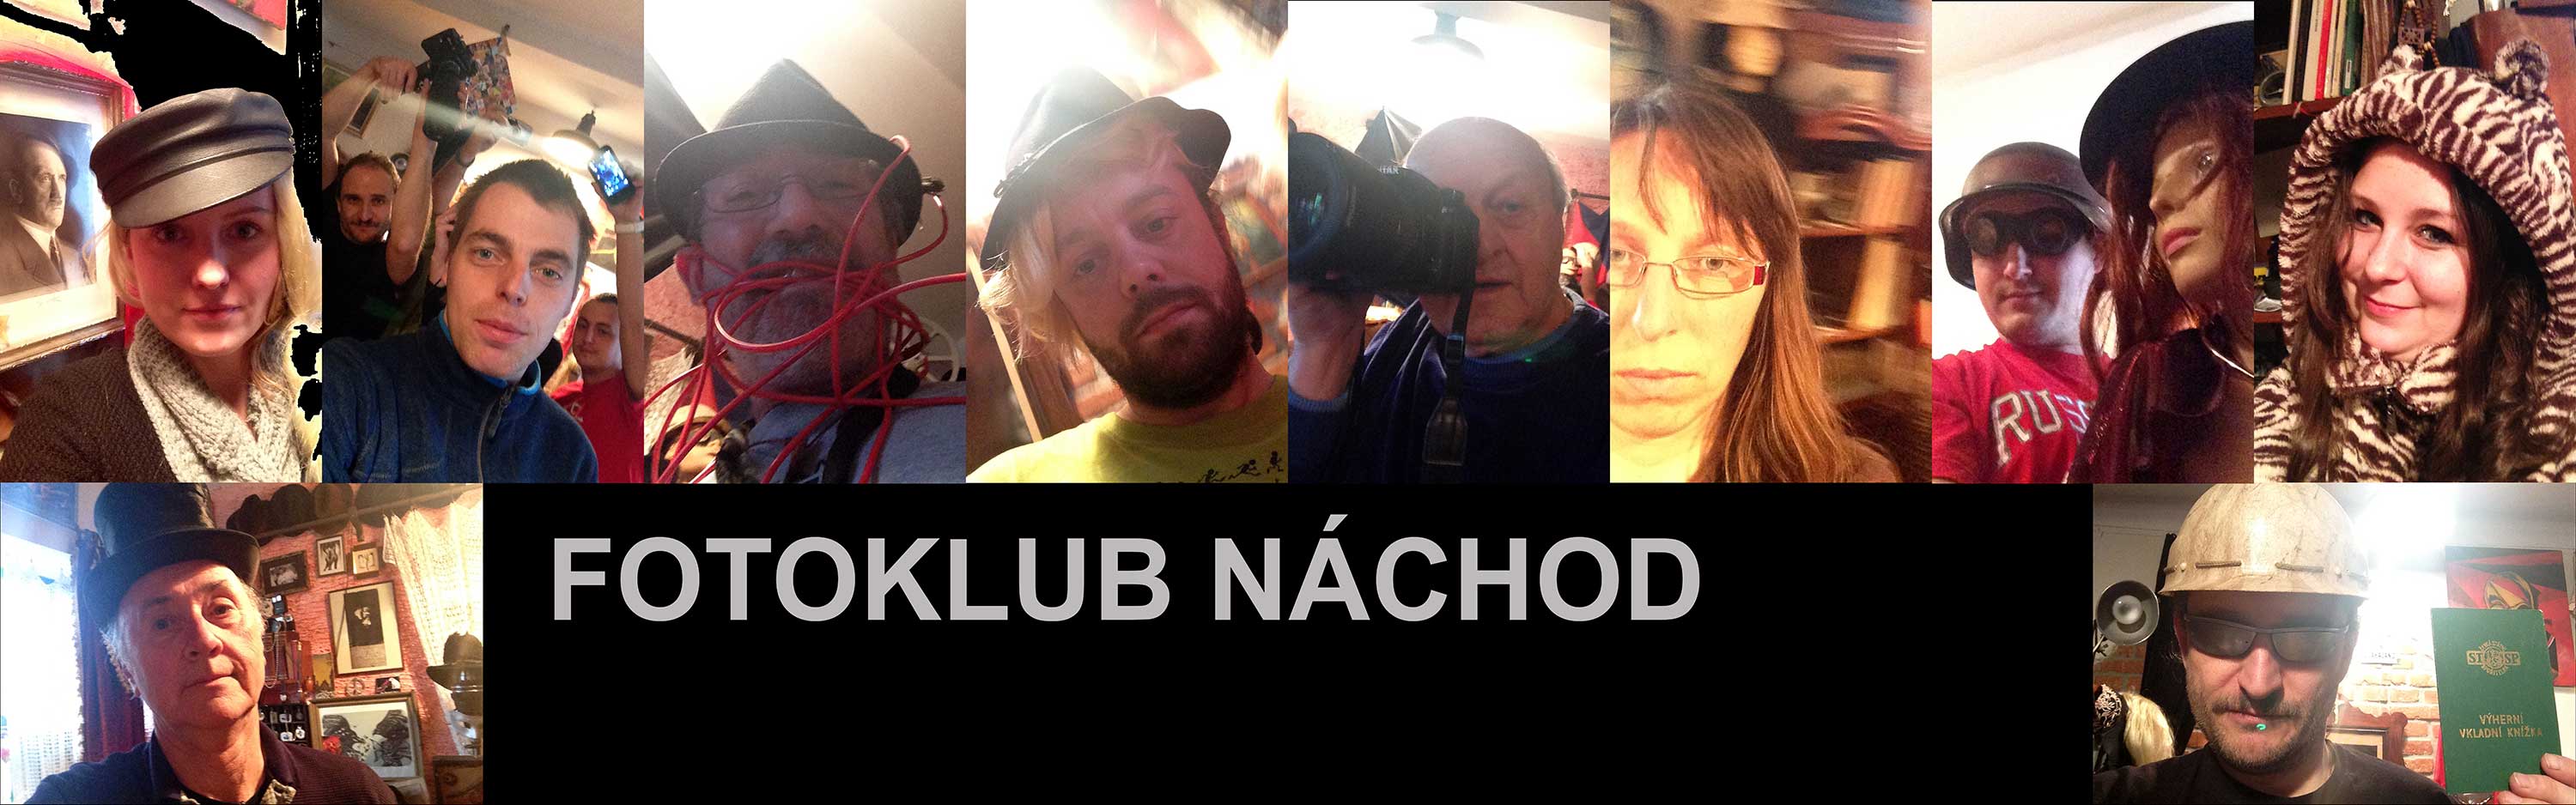 FOTOKLUB_NACHOD-PF2015-TEXT1-web-